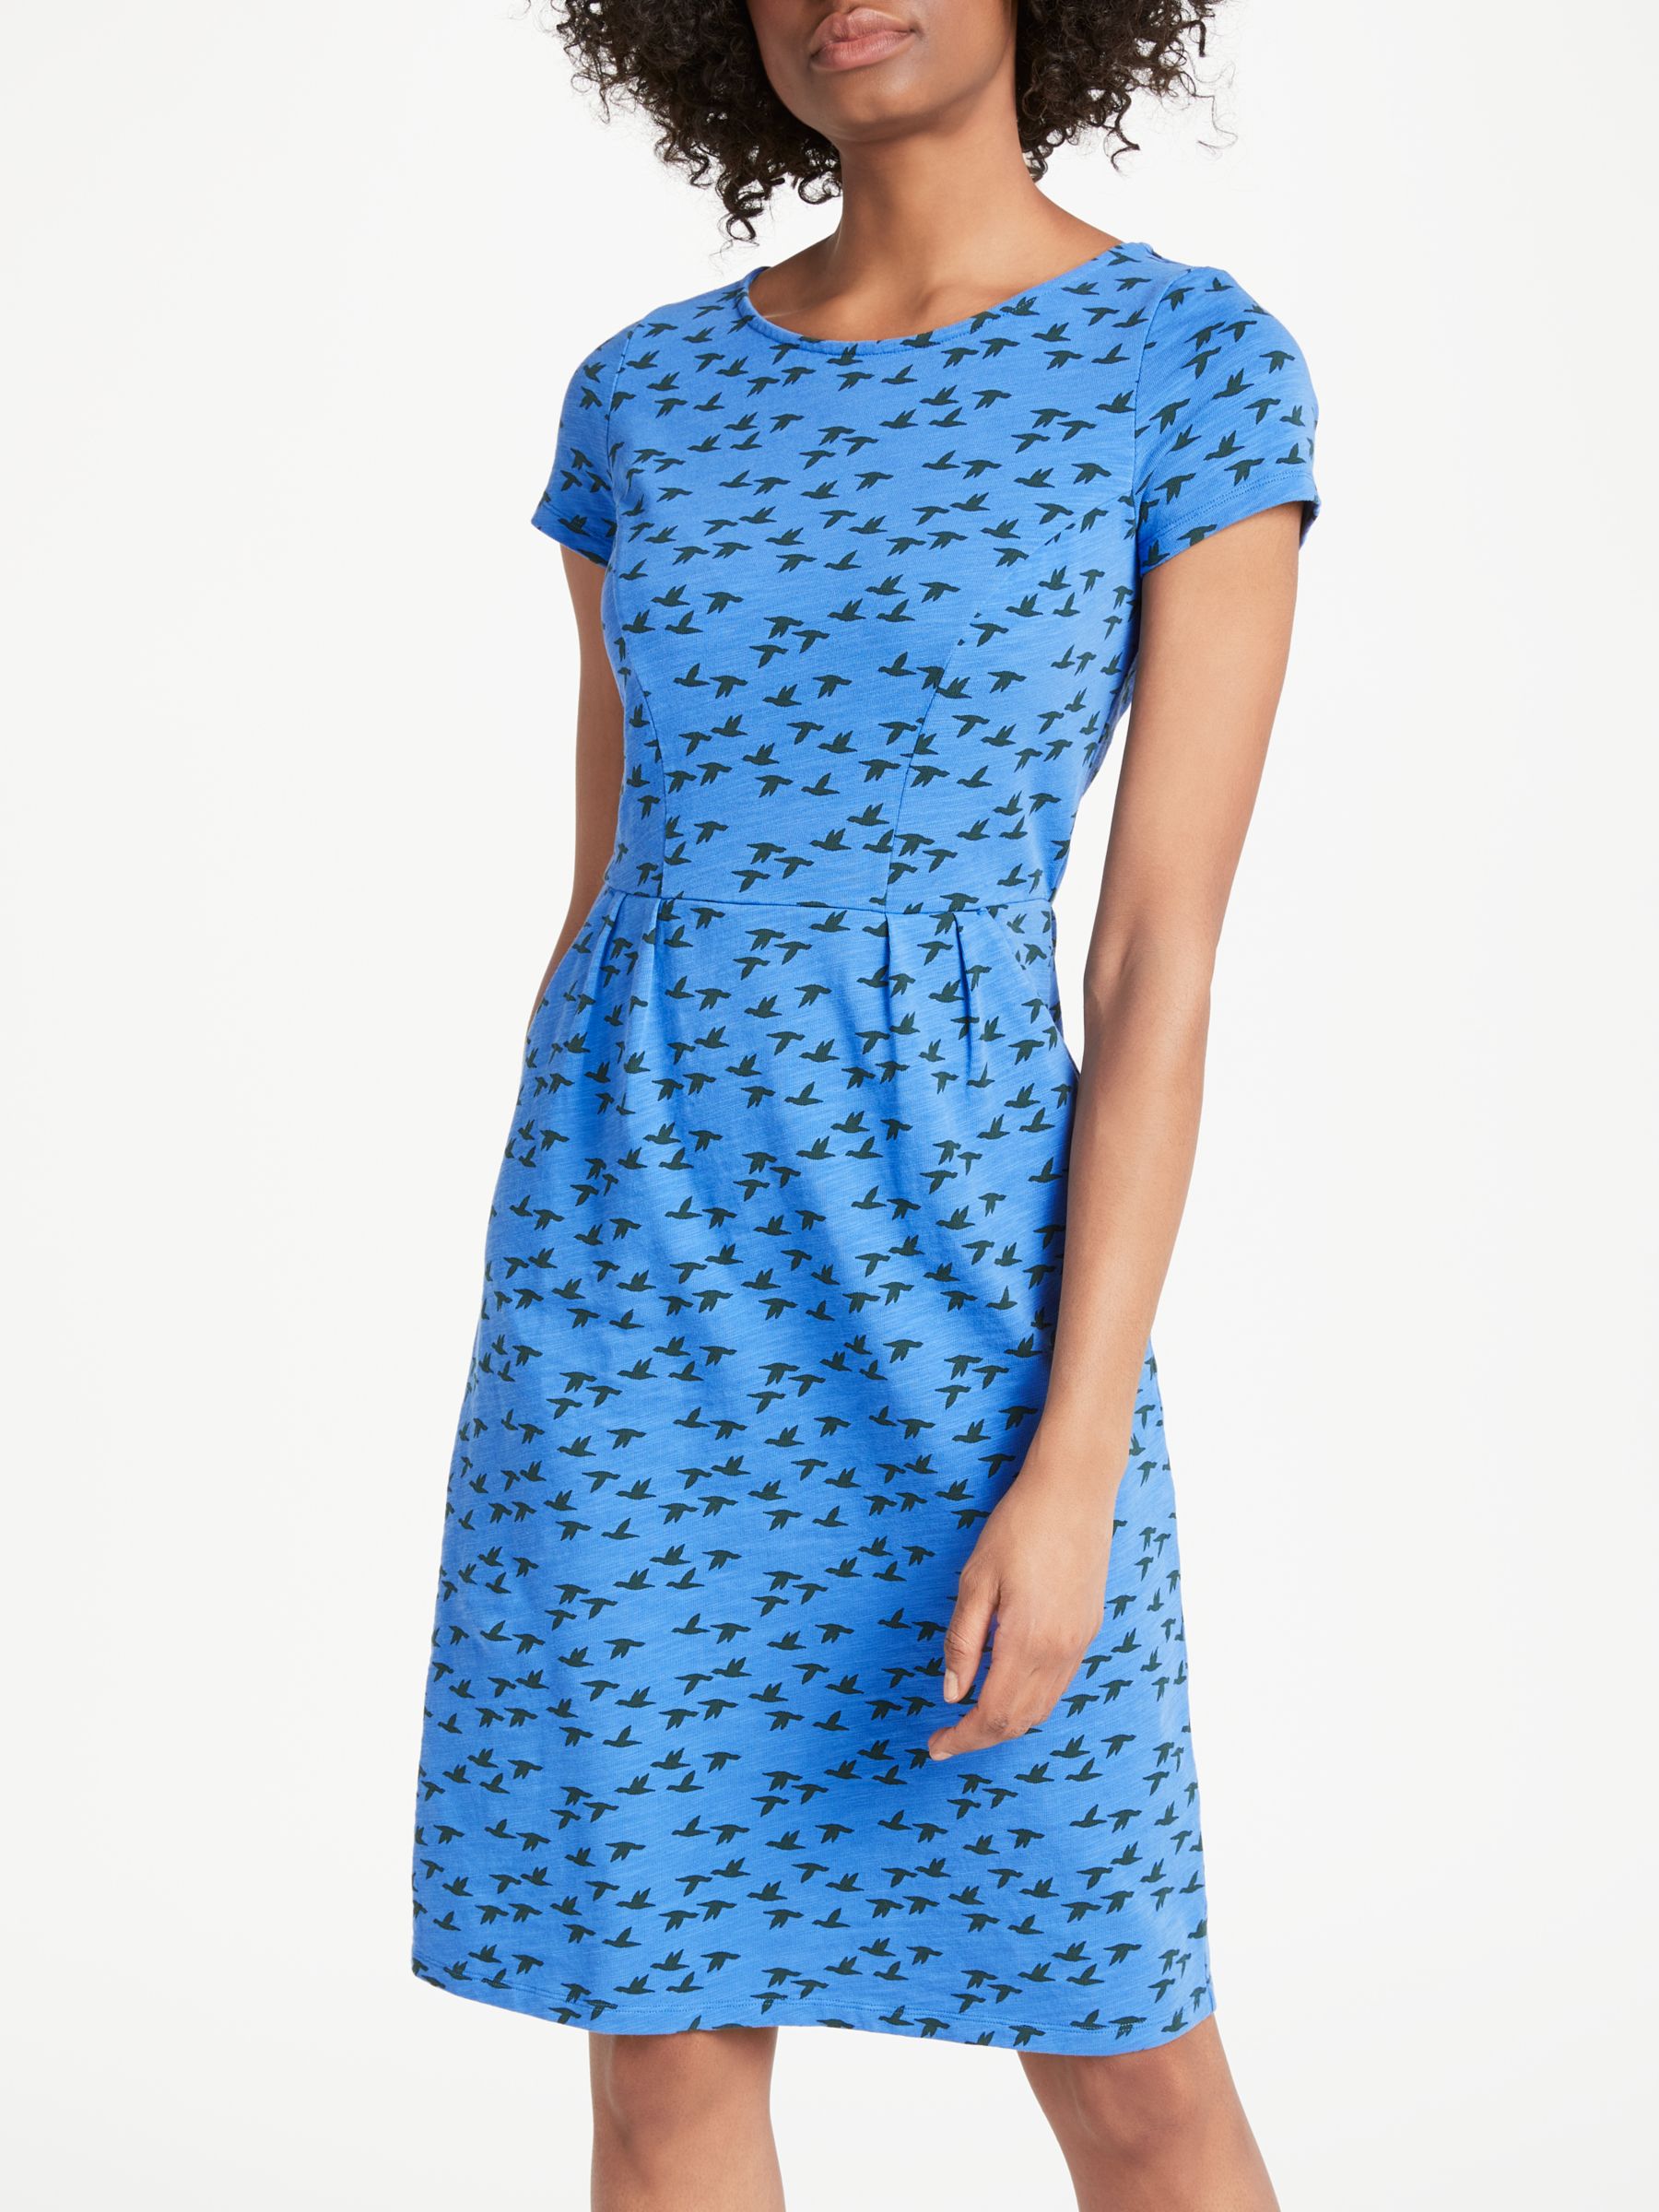 Boden Phoebe Jersey Dress, Soft Blue 